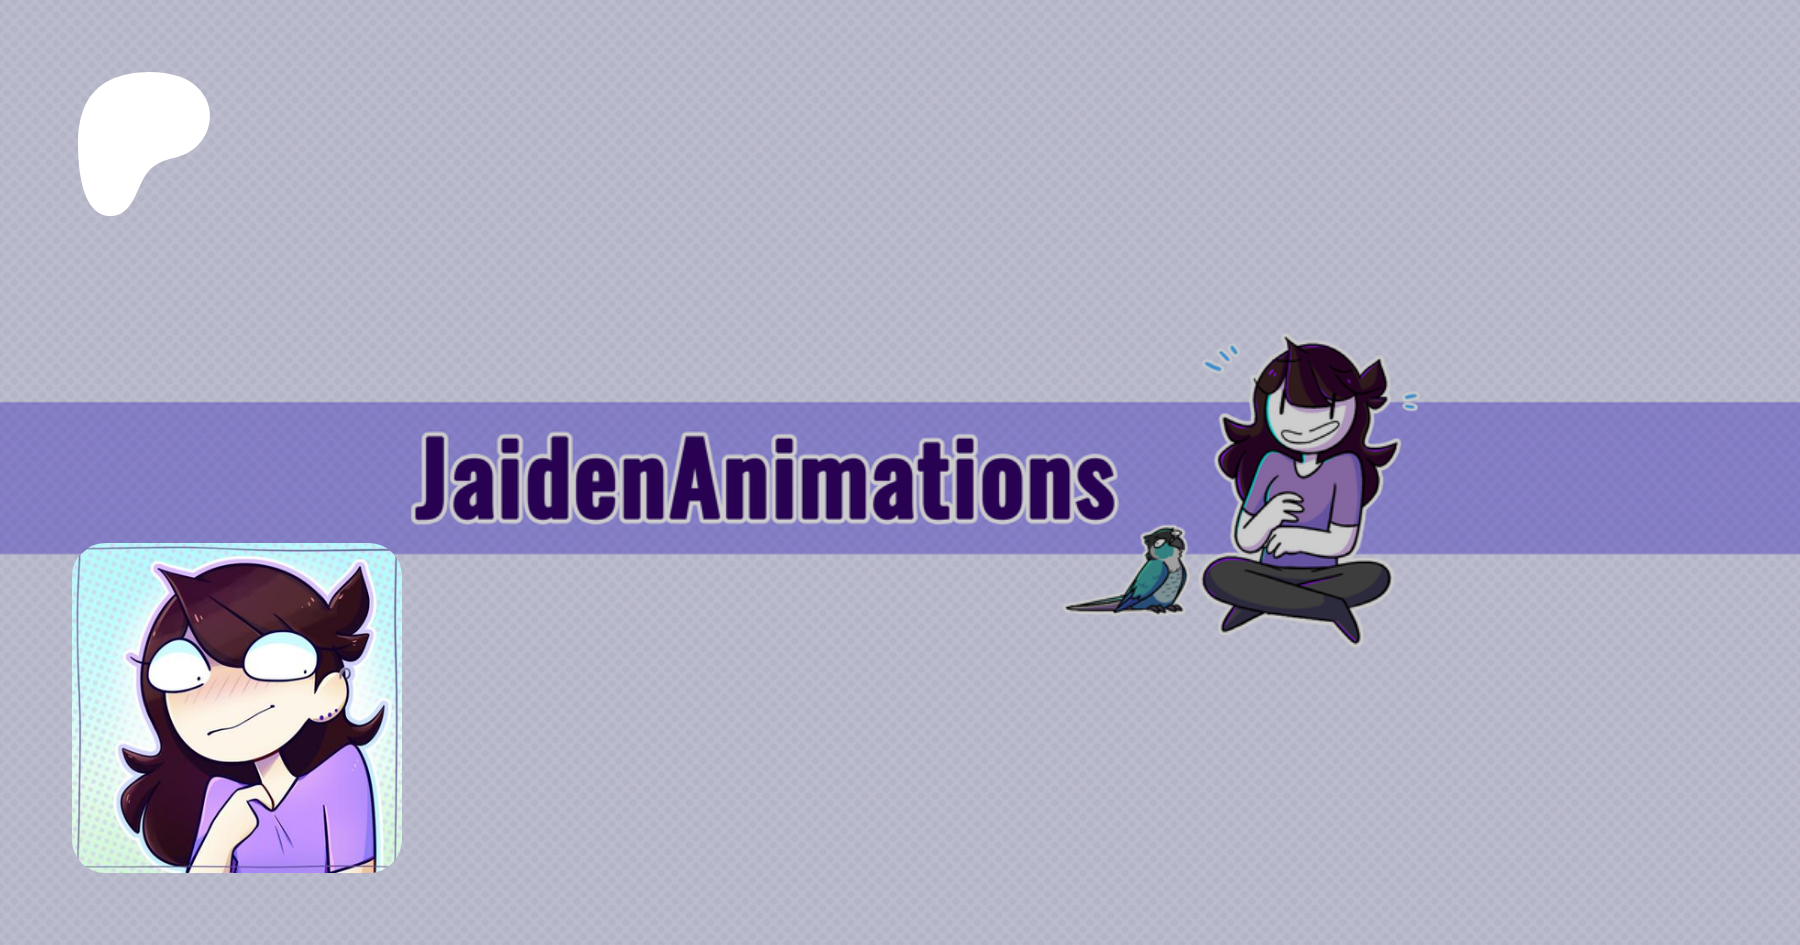 JaidenAnimations  Jaiden animations, Animation design, Animation tutorial